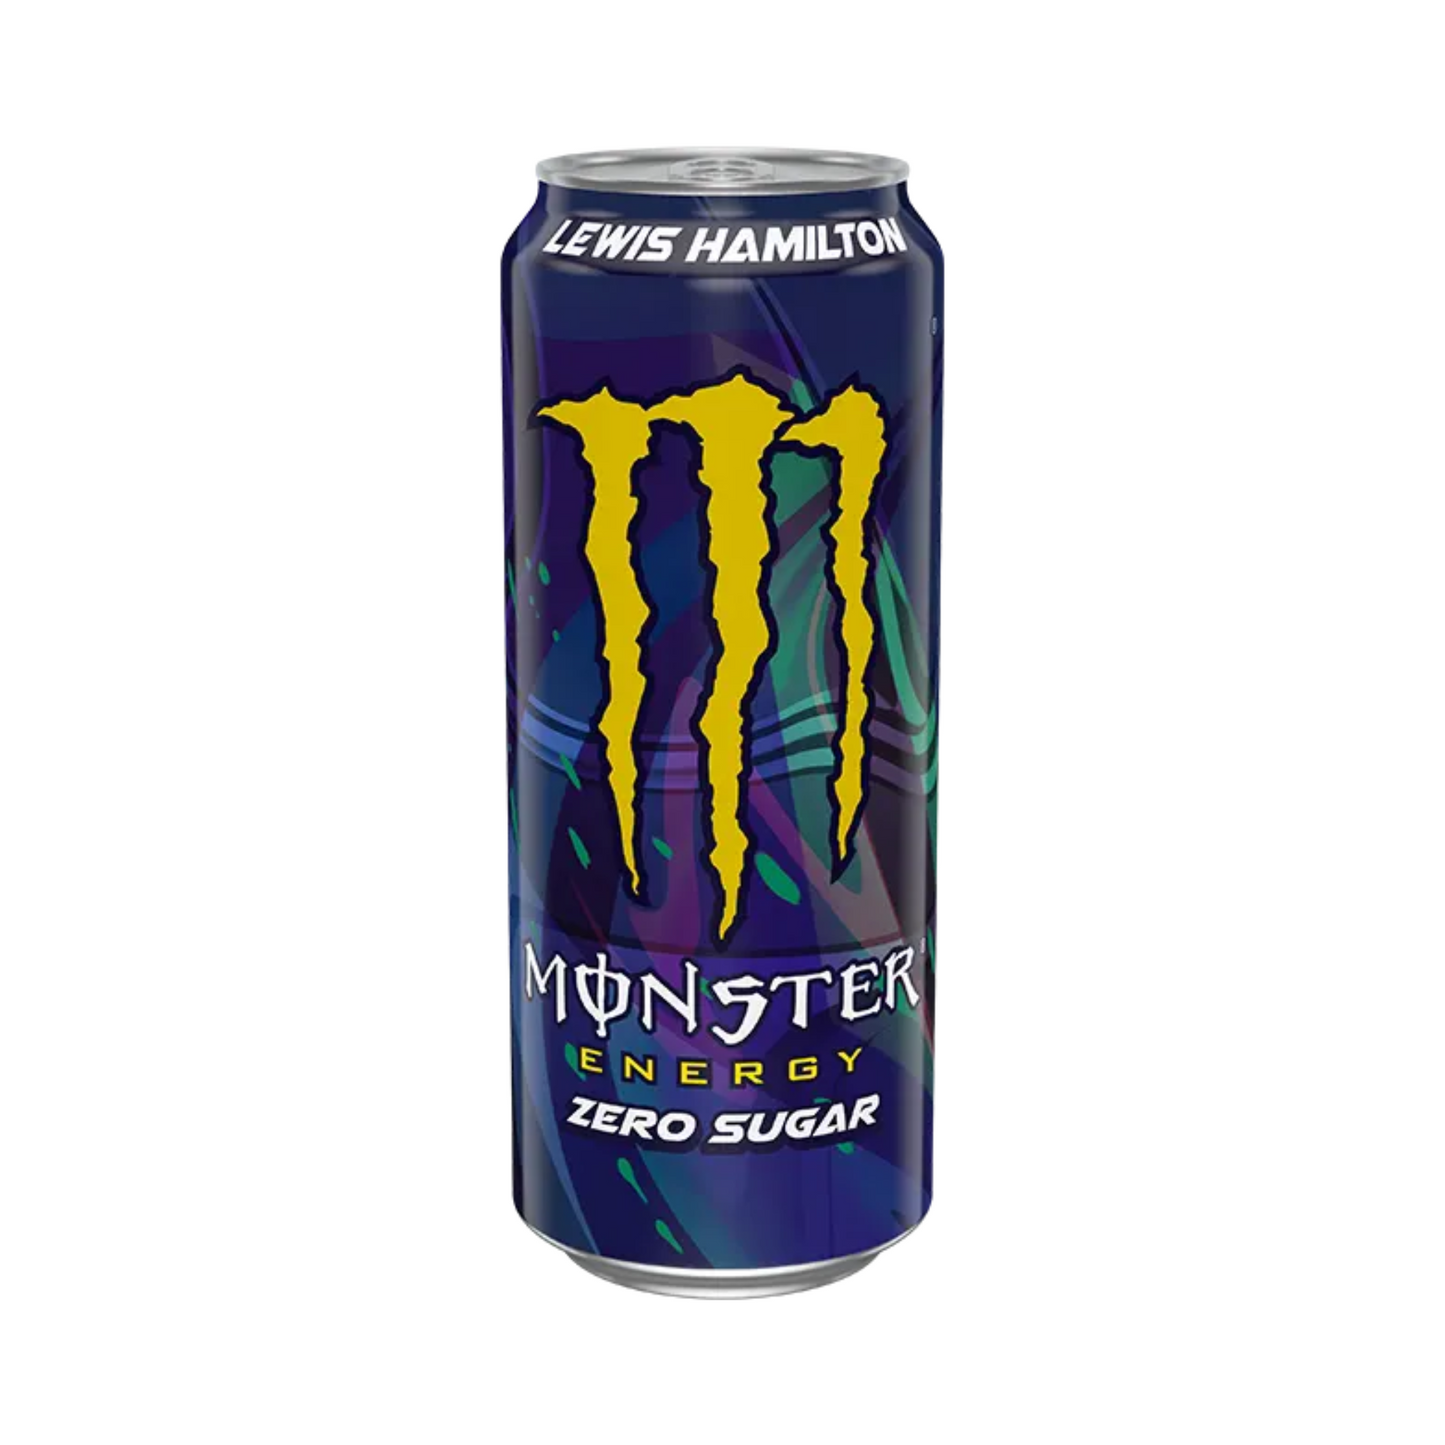 MONSTER Energy Drink Lewis Hamilton zero sugar 500ml